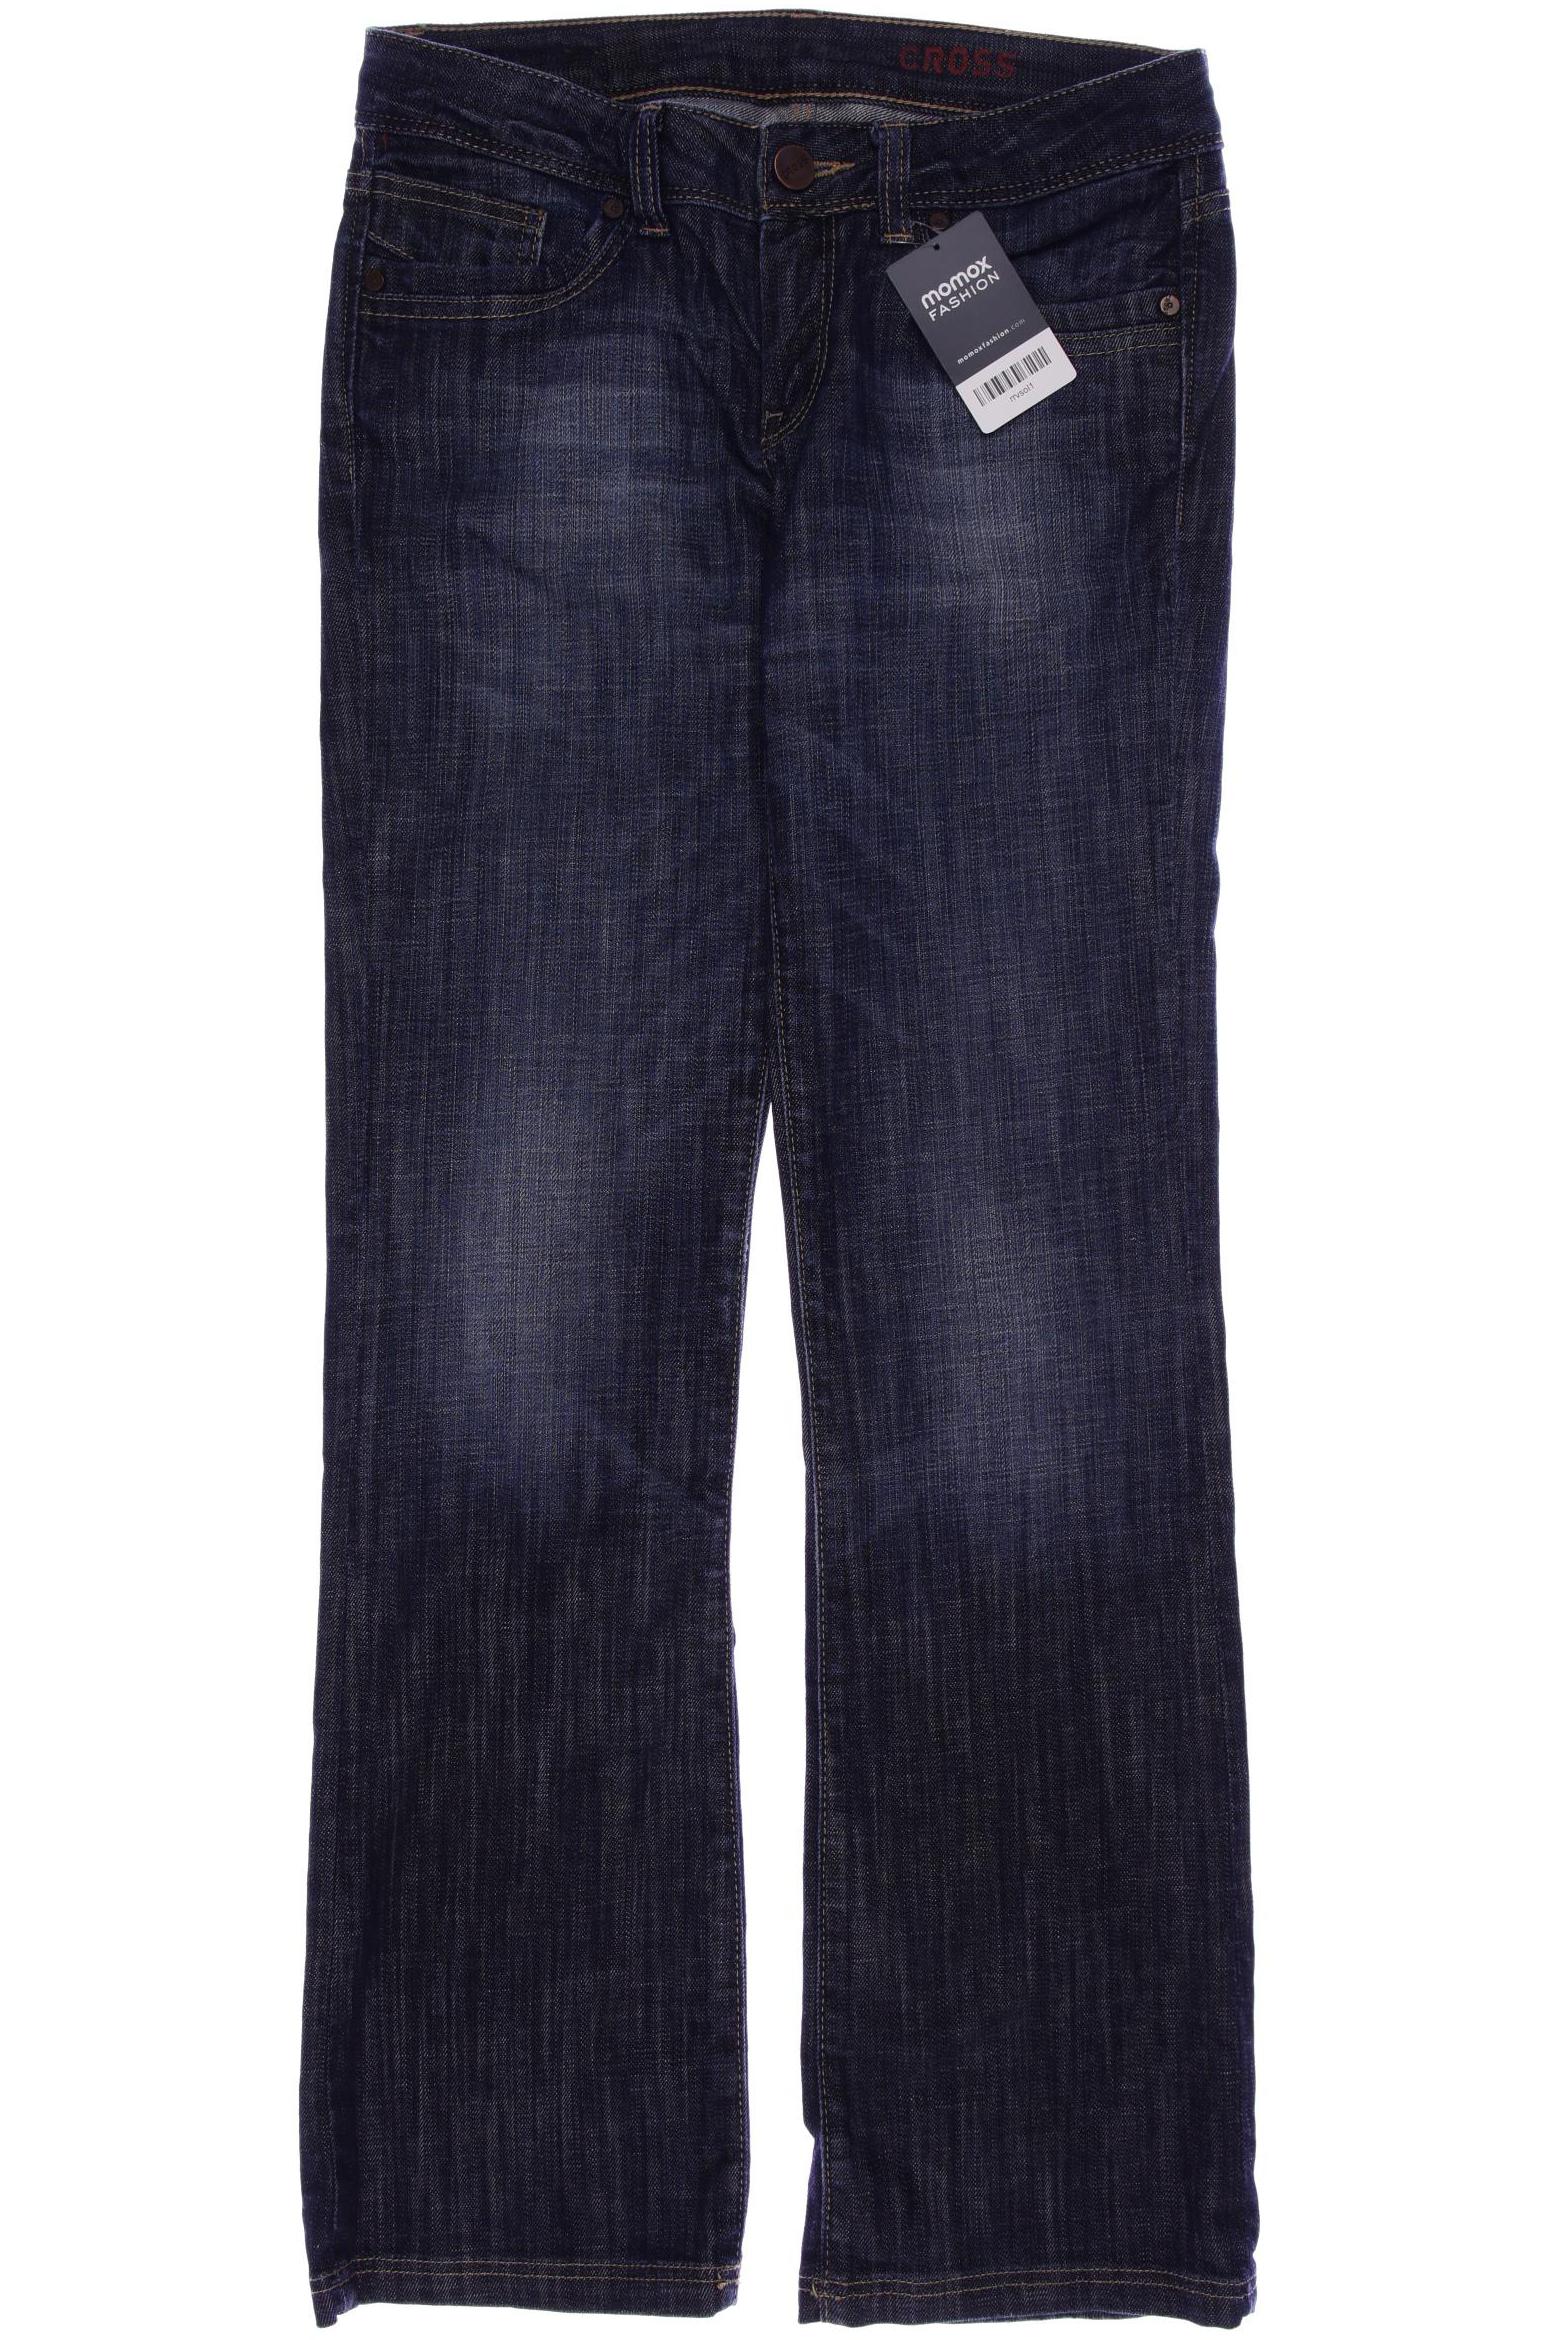 Cross Jeans Damen Jeans, marineblau von cross jeans